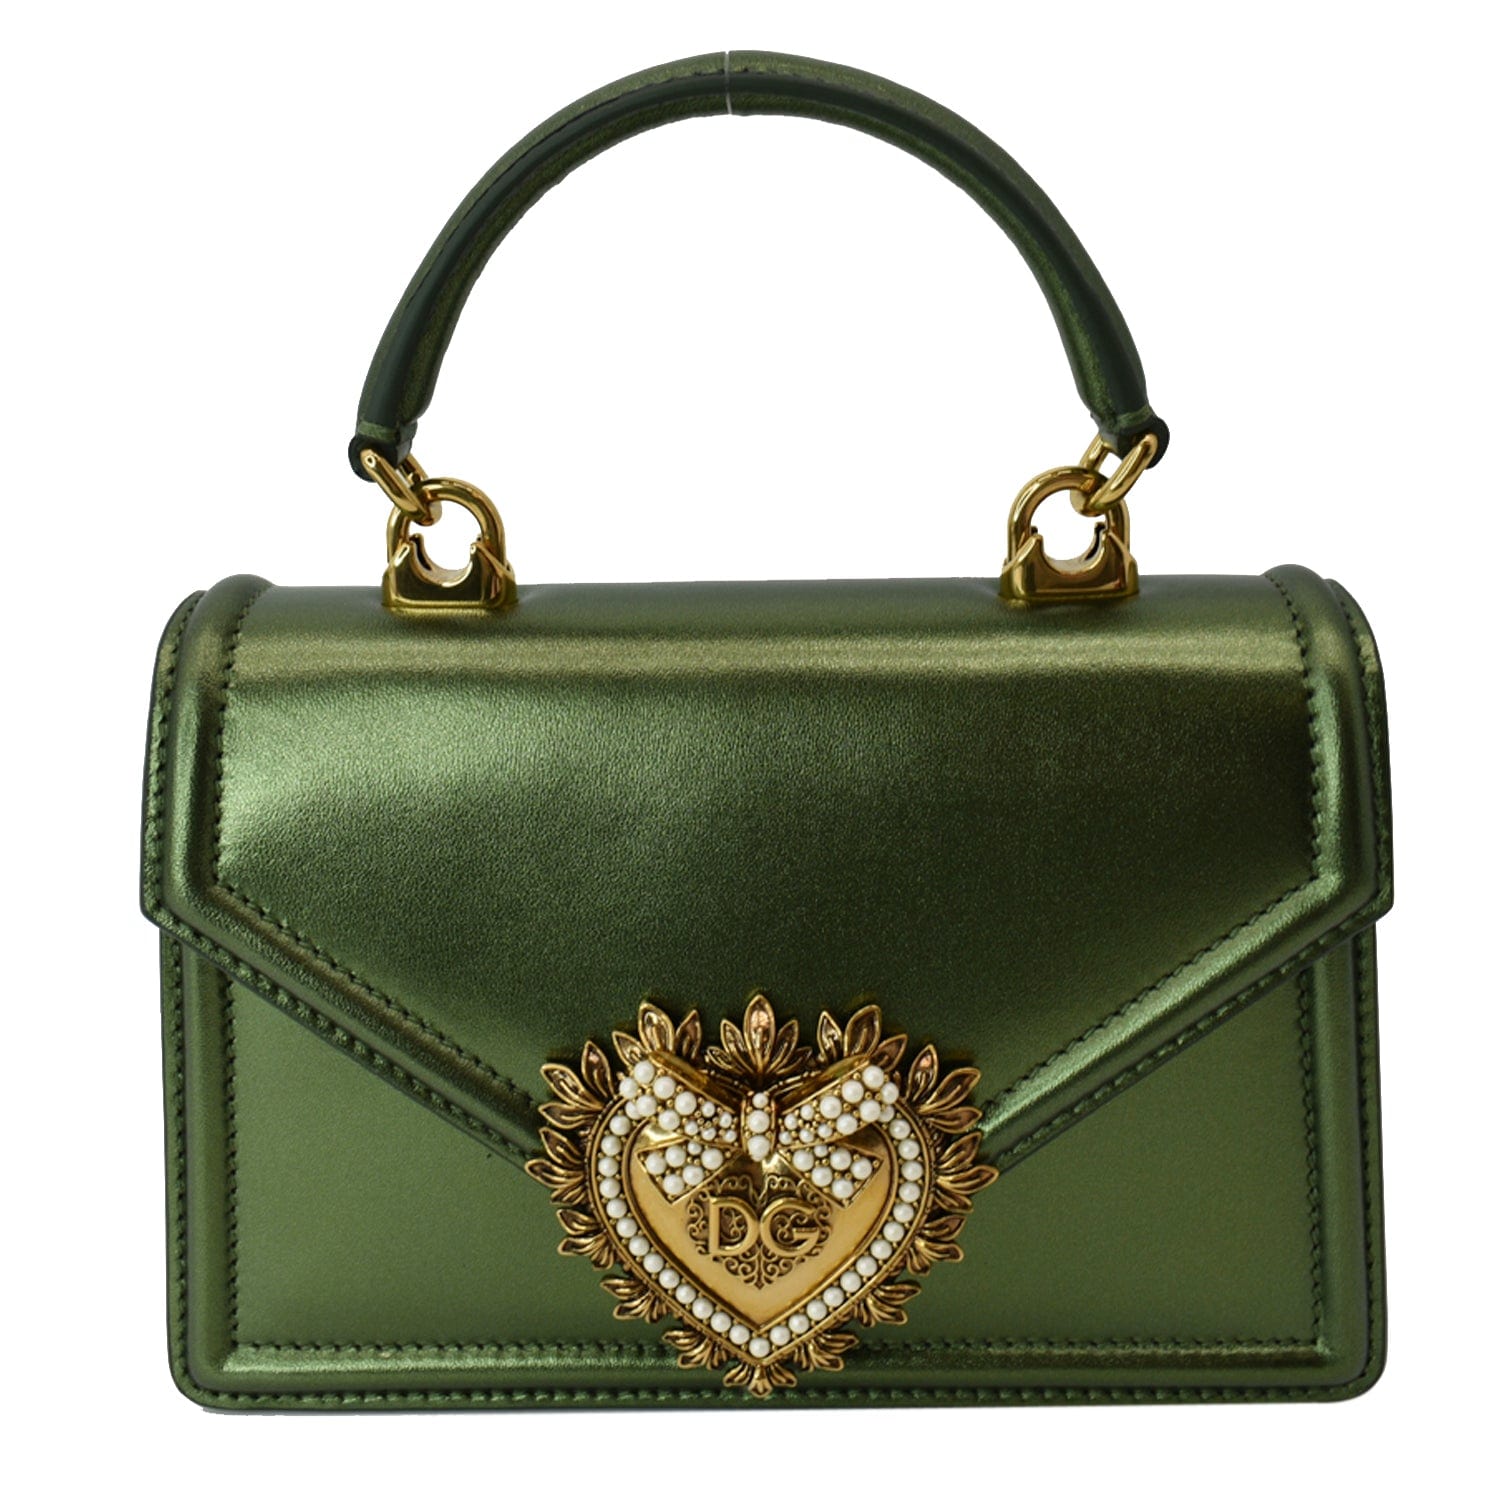 Dolce & Gabbana Devotion Mini Metallic Leather Top-Handle Bag